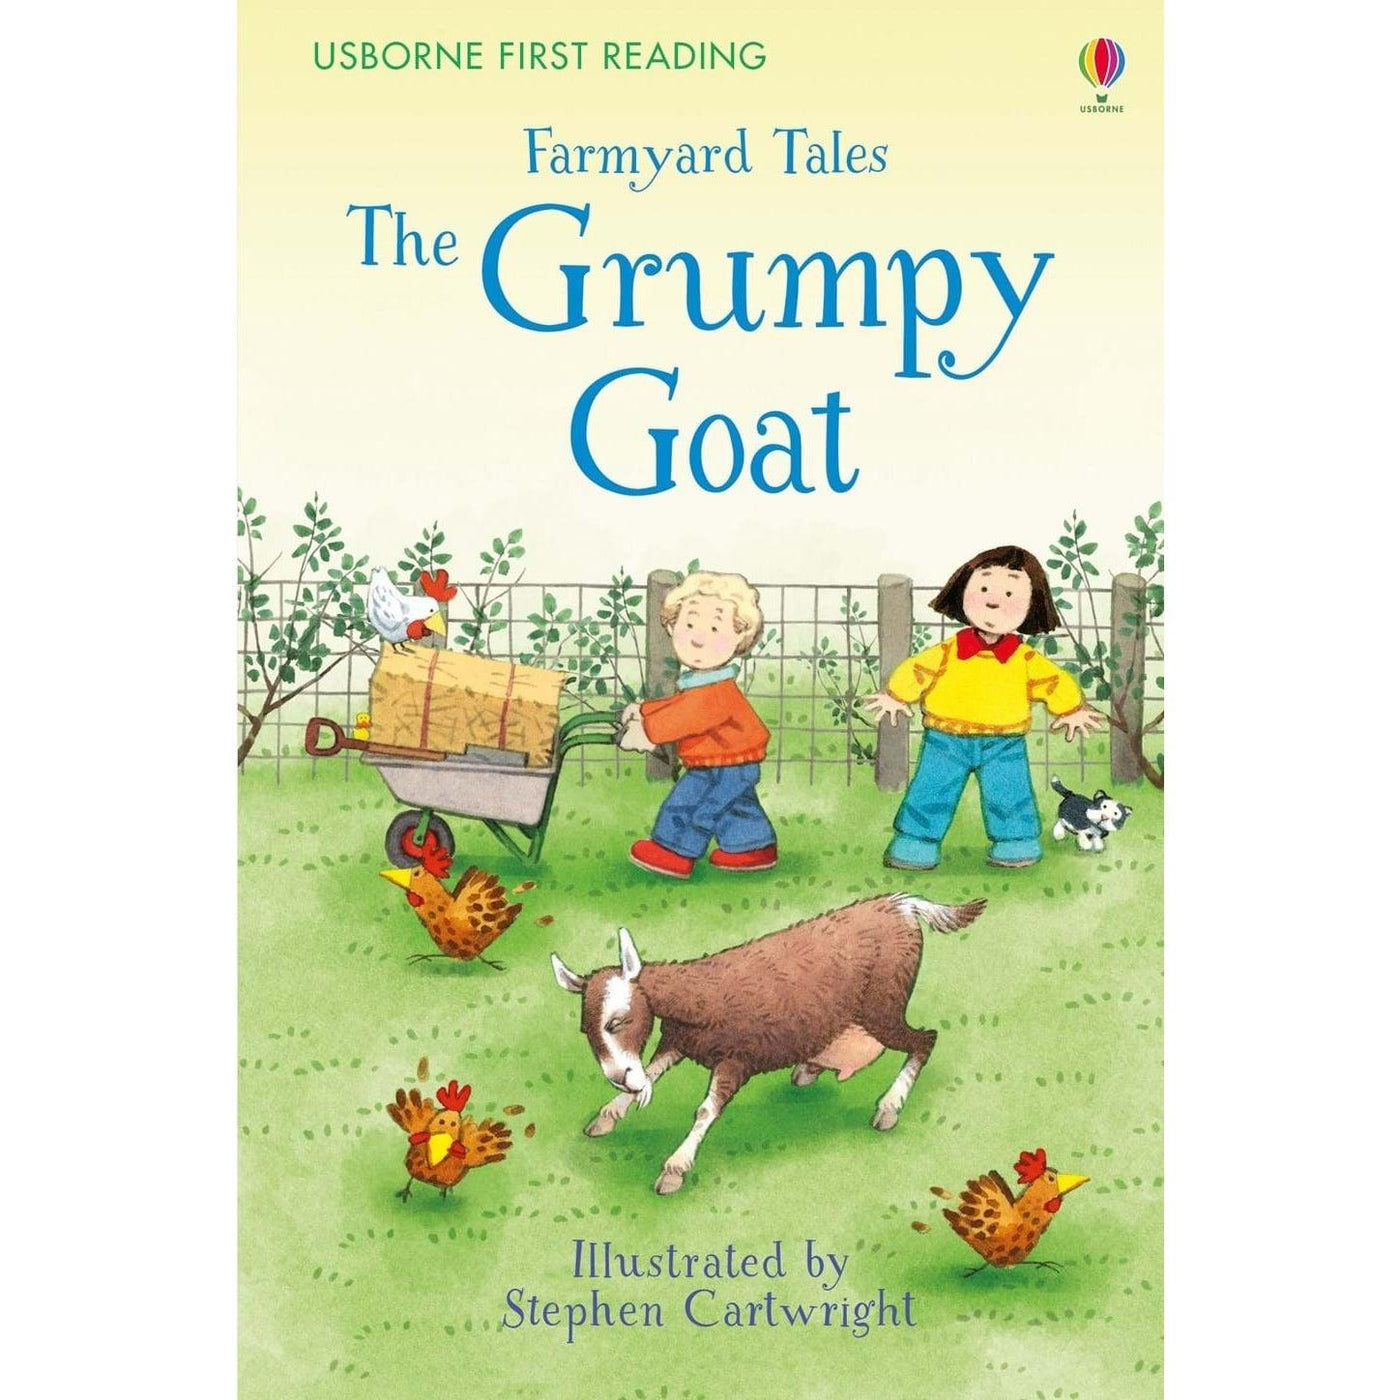 Farmyard Tales: The Grumpy Goat